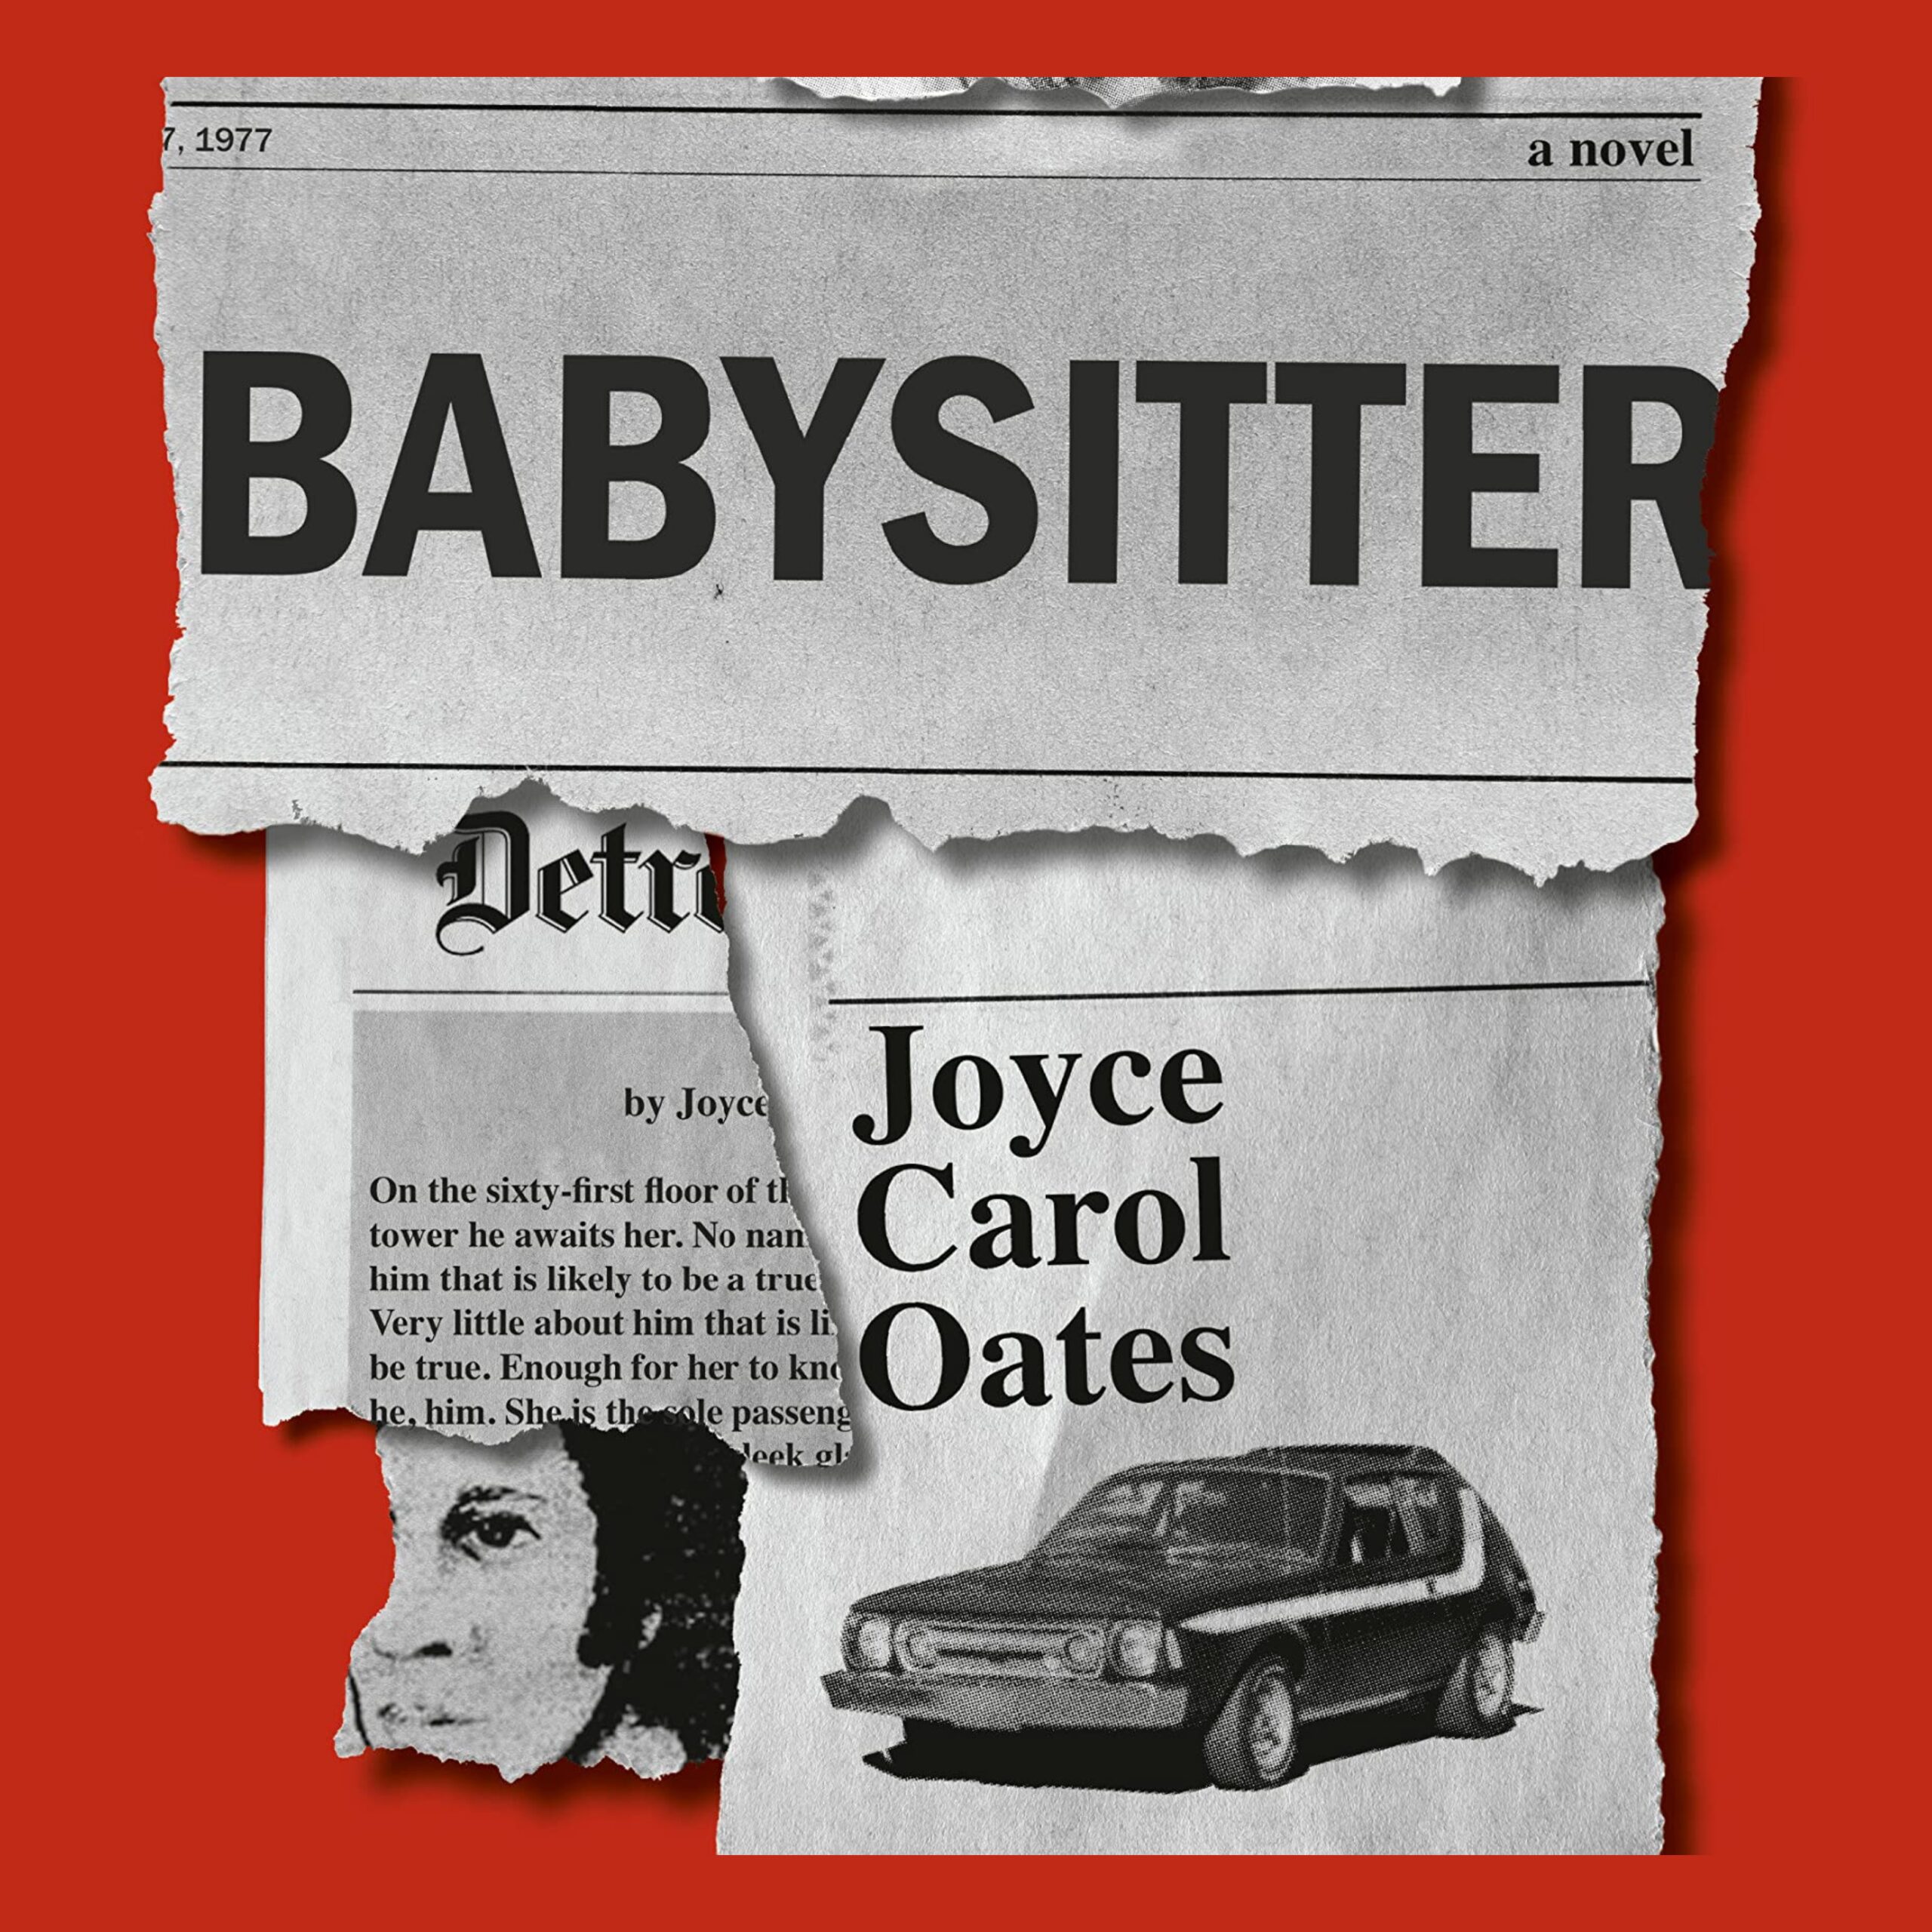 The Book Show #1783 - Joyce Carol Oates - Babysitter